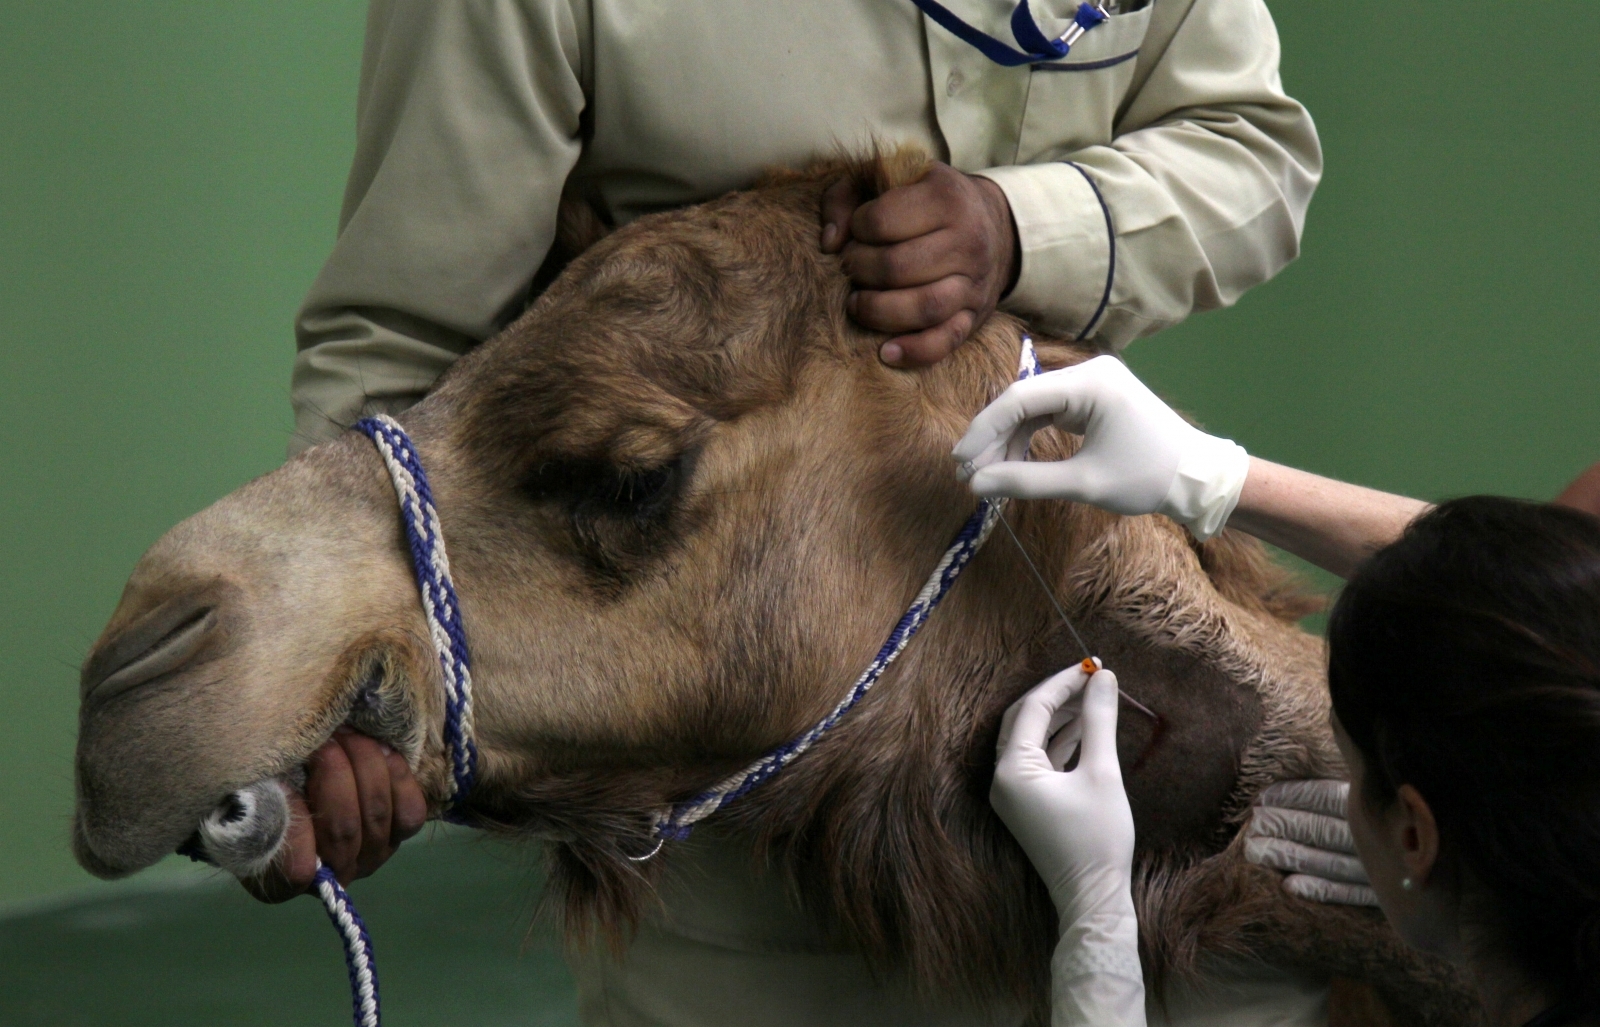 Dubai Camel Hospital